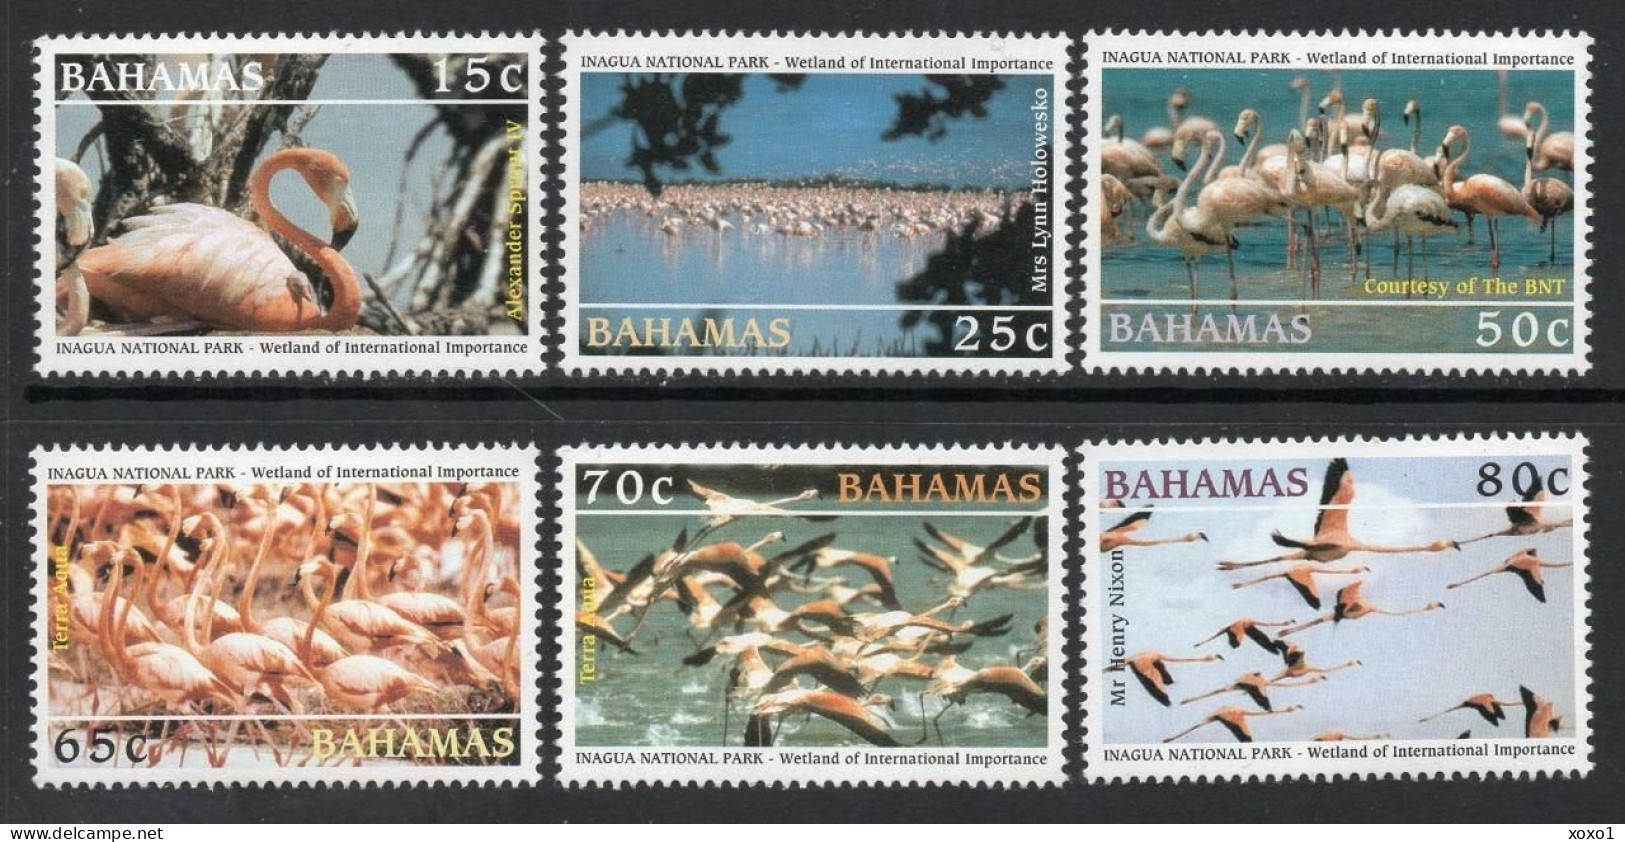 Bahamas 2003 MiNr. 1129 - 1134  Birds American Flamingo Inagua National Park 6v MNH** 9.00 € - Flamingos